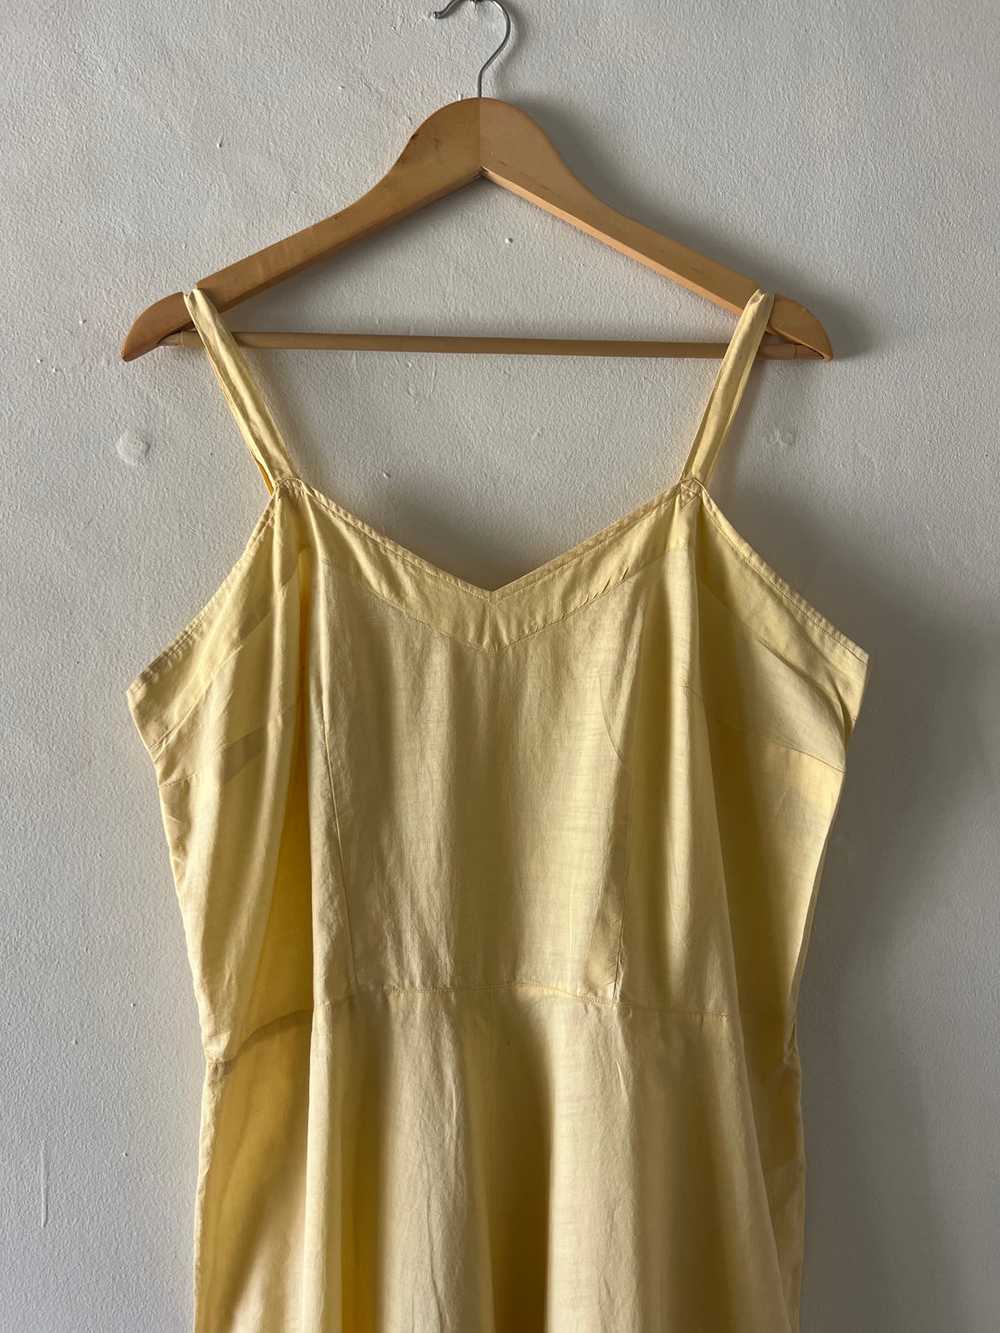 Vintage Cotton Yellow Dress (L) - image 3